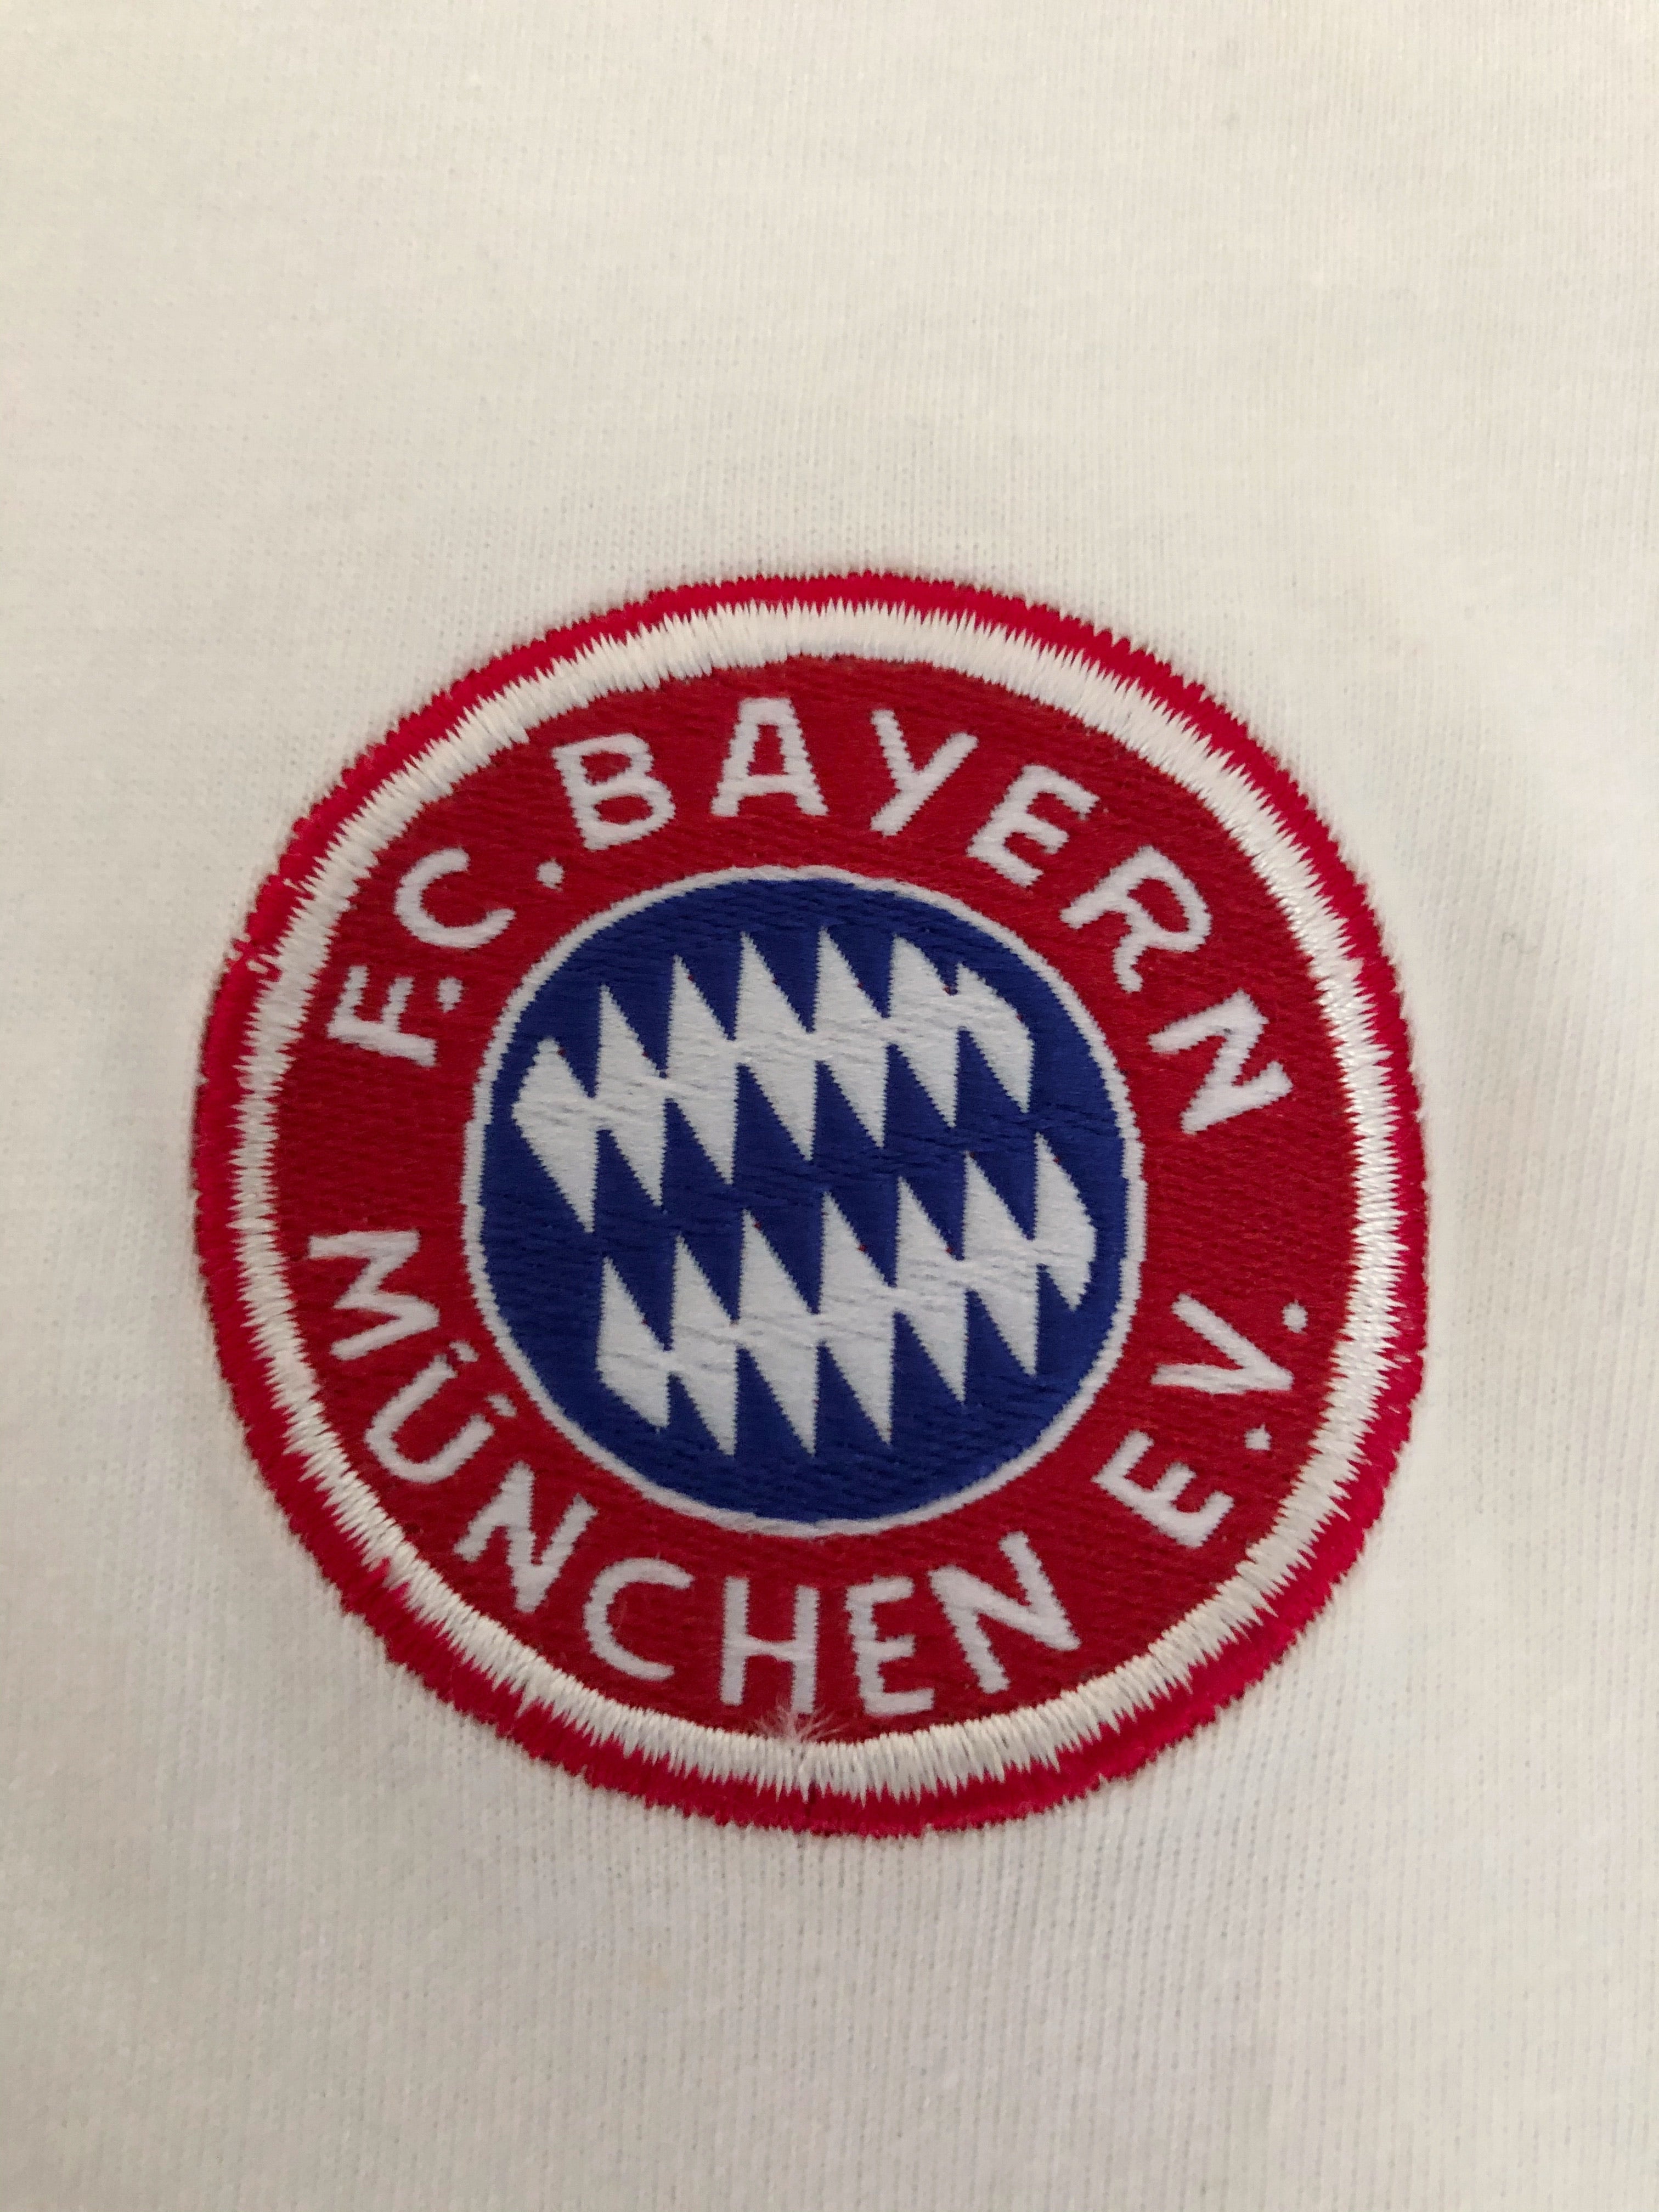 Maillot d'entraînement du Bayern Munich 1989/91 (S) 9.5/10